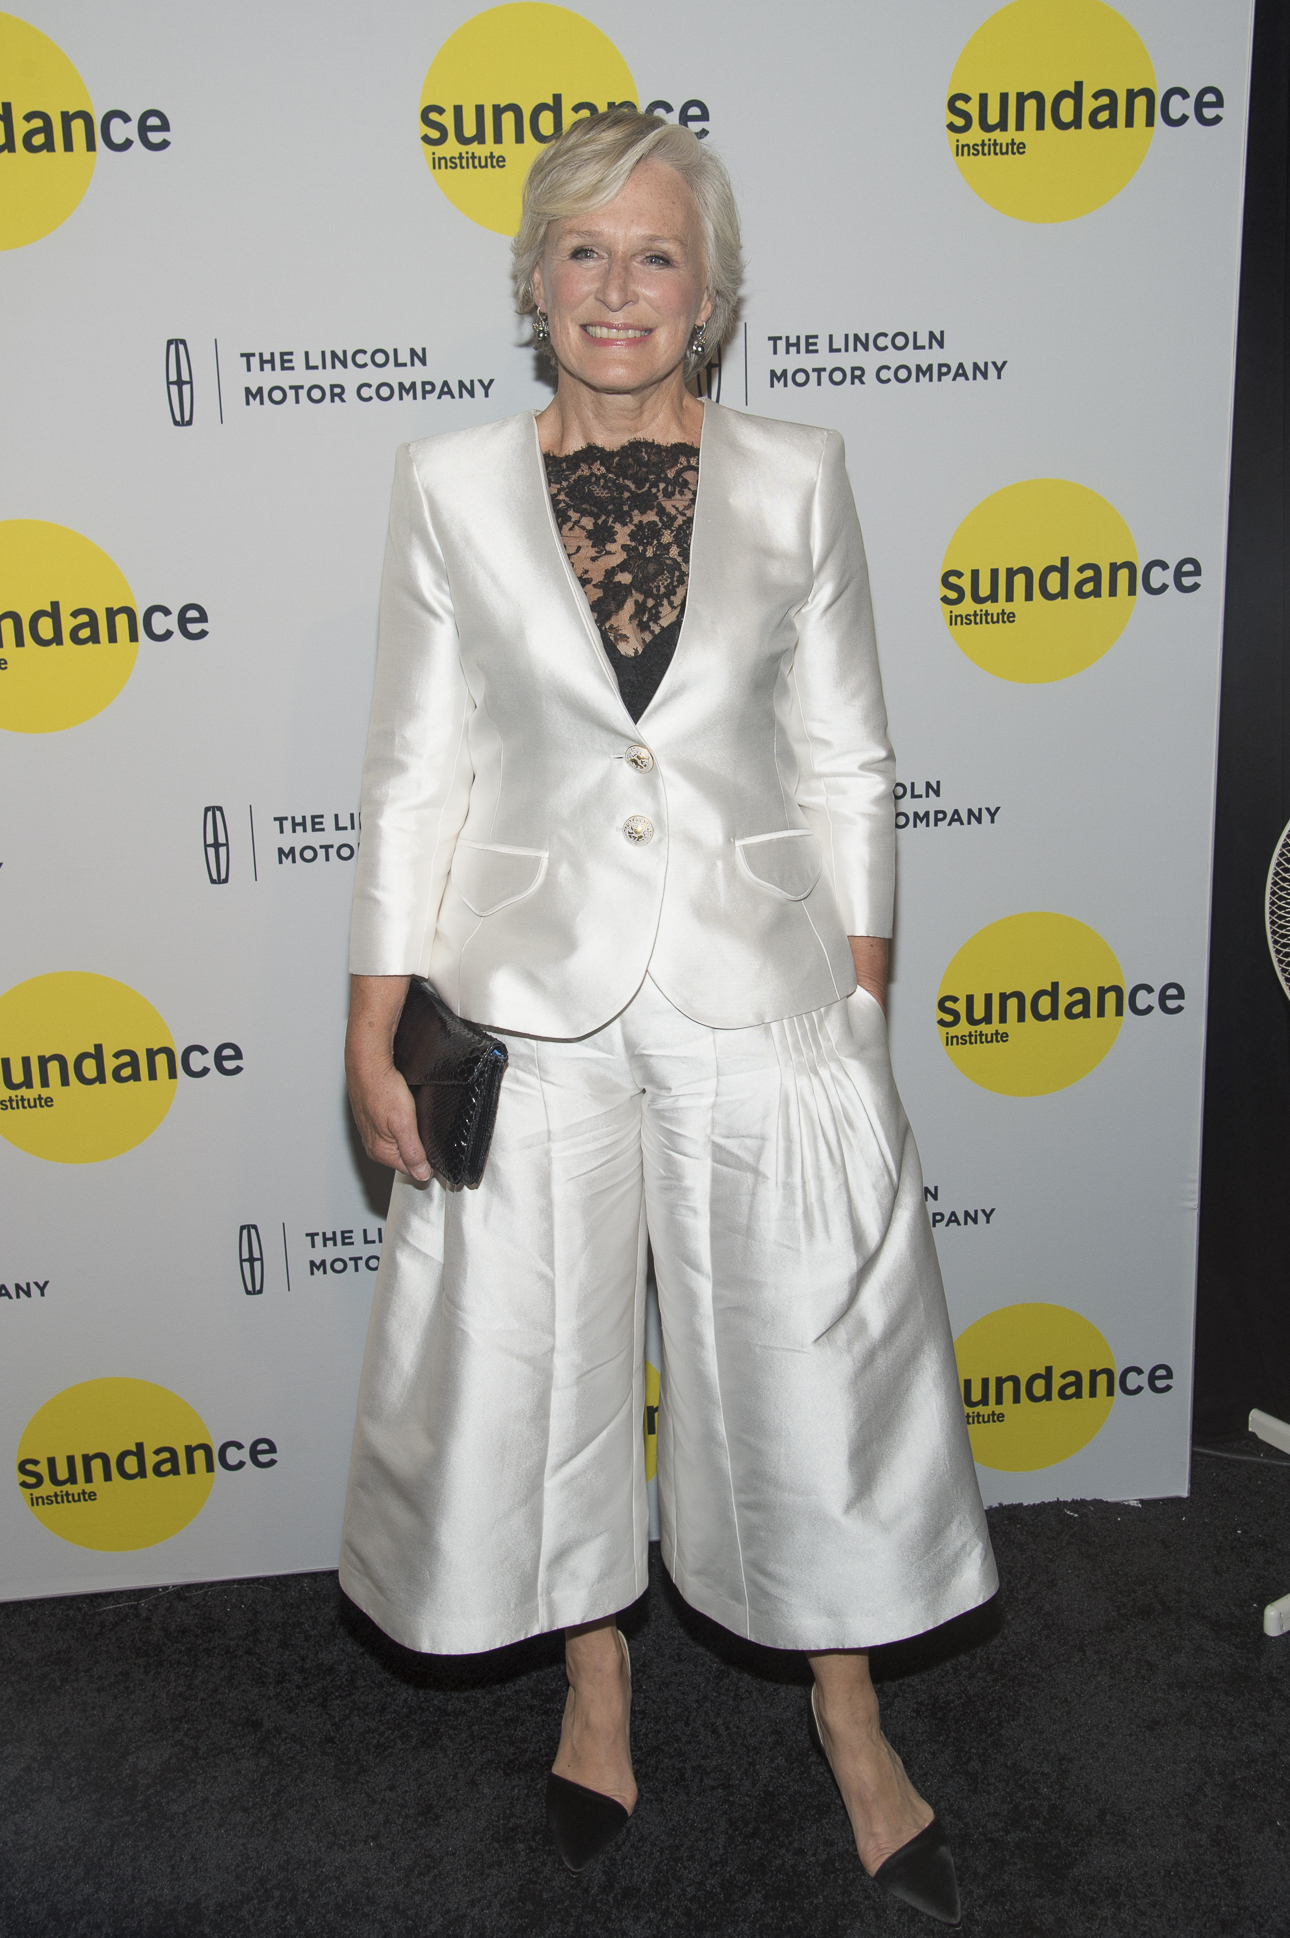 Keri Russell, Jeremy Irons, Glenn Close and Emmy Rossum attend the Sundance Institute New York Benefit 2014